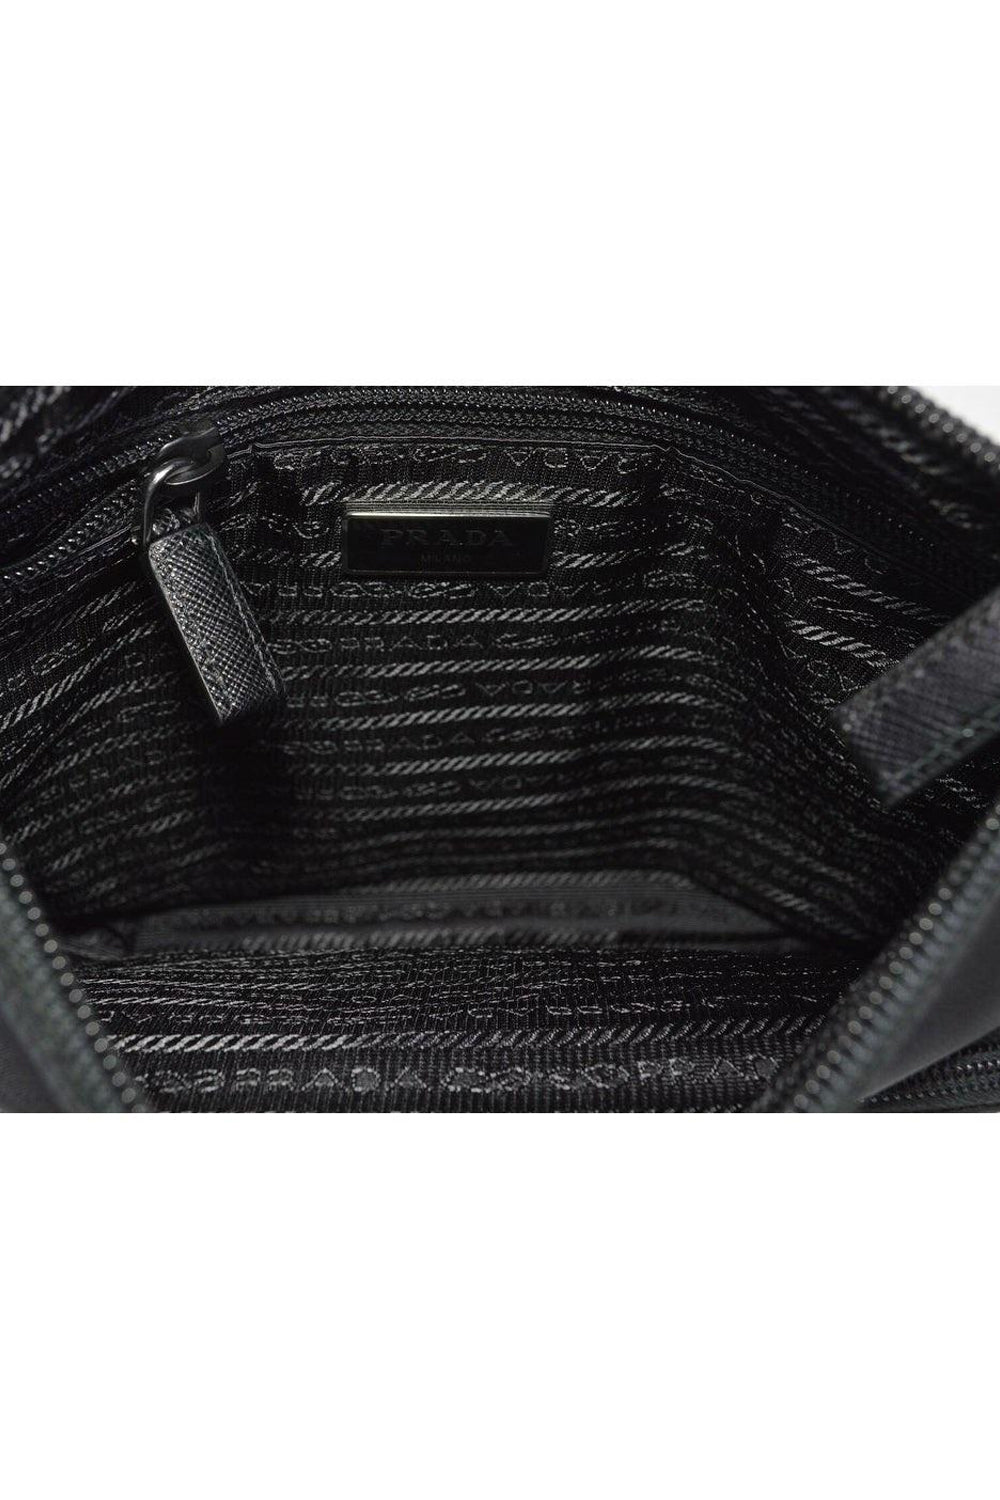 Prada Tessuto Nylon Sport Crossbody Bag